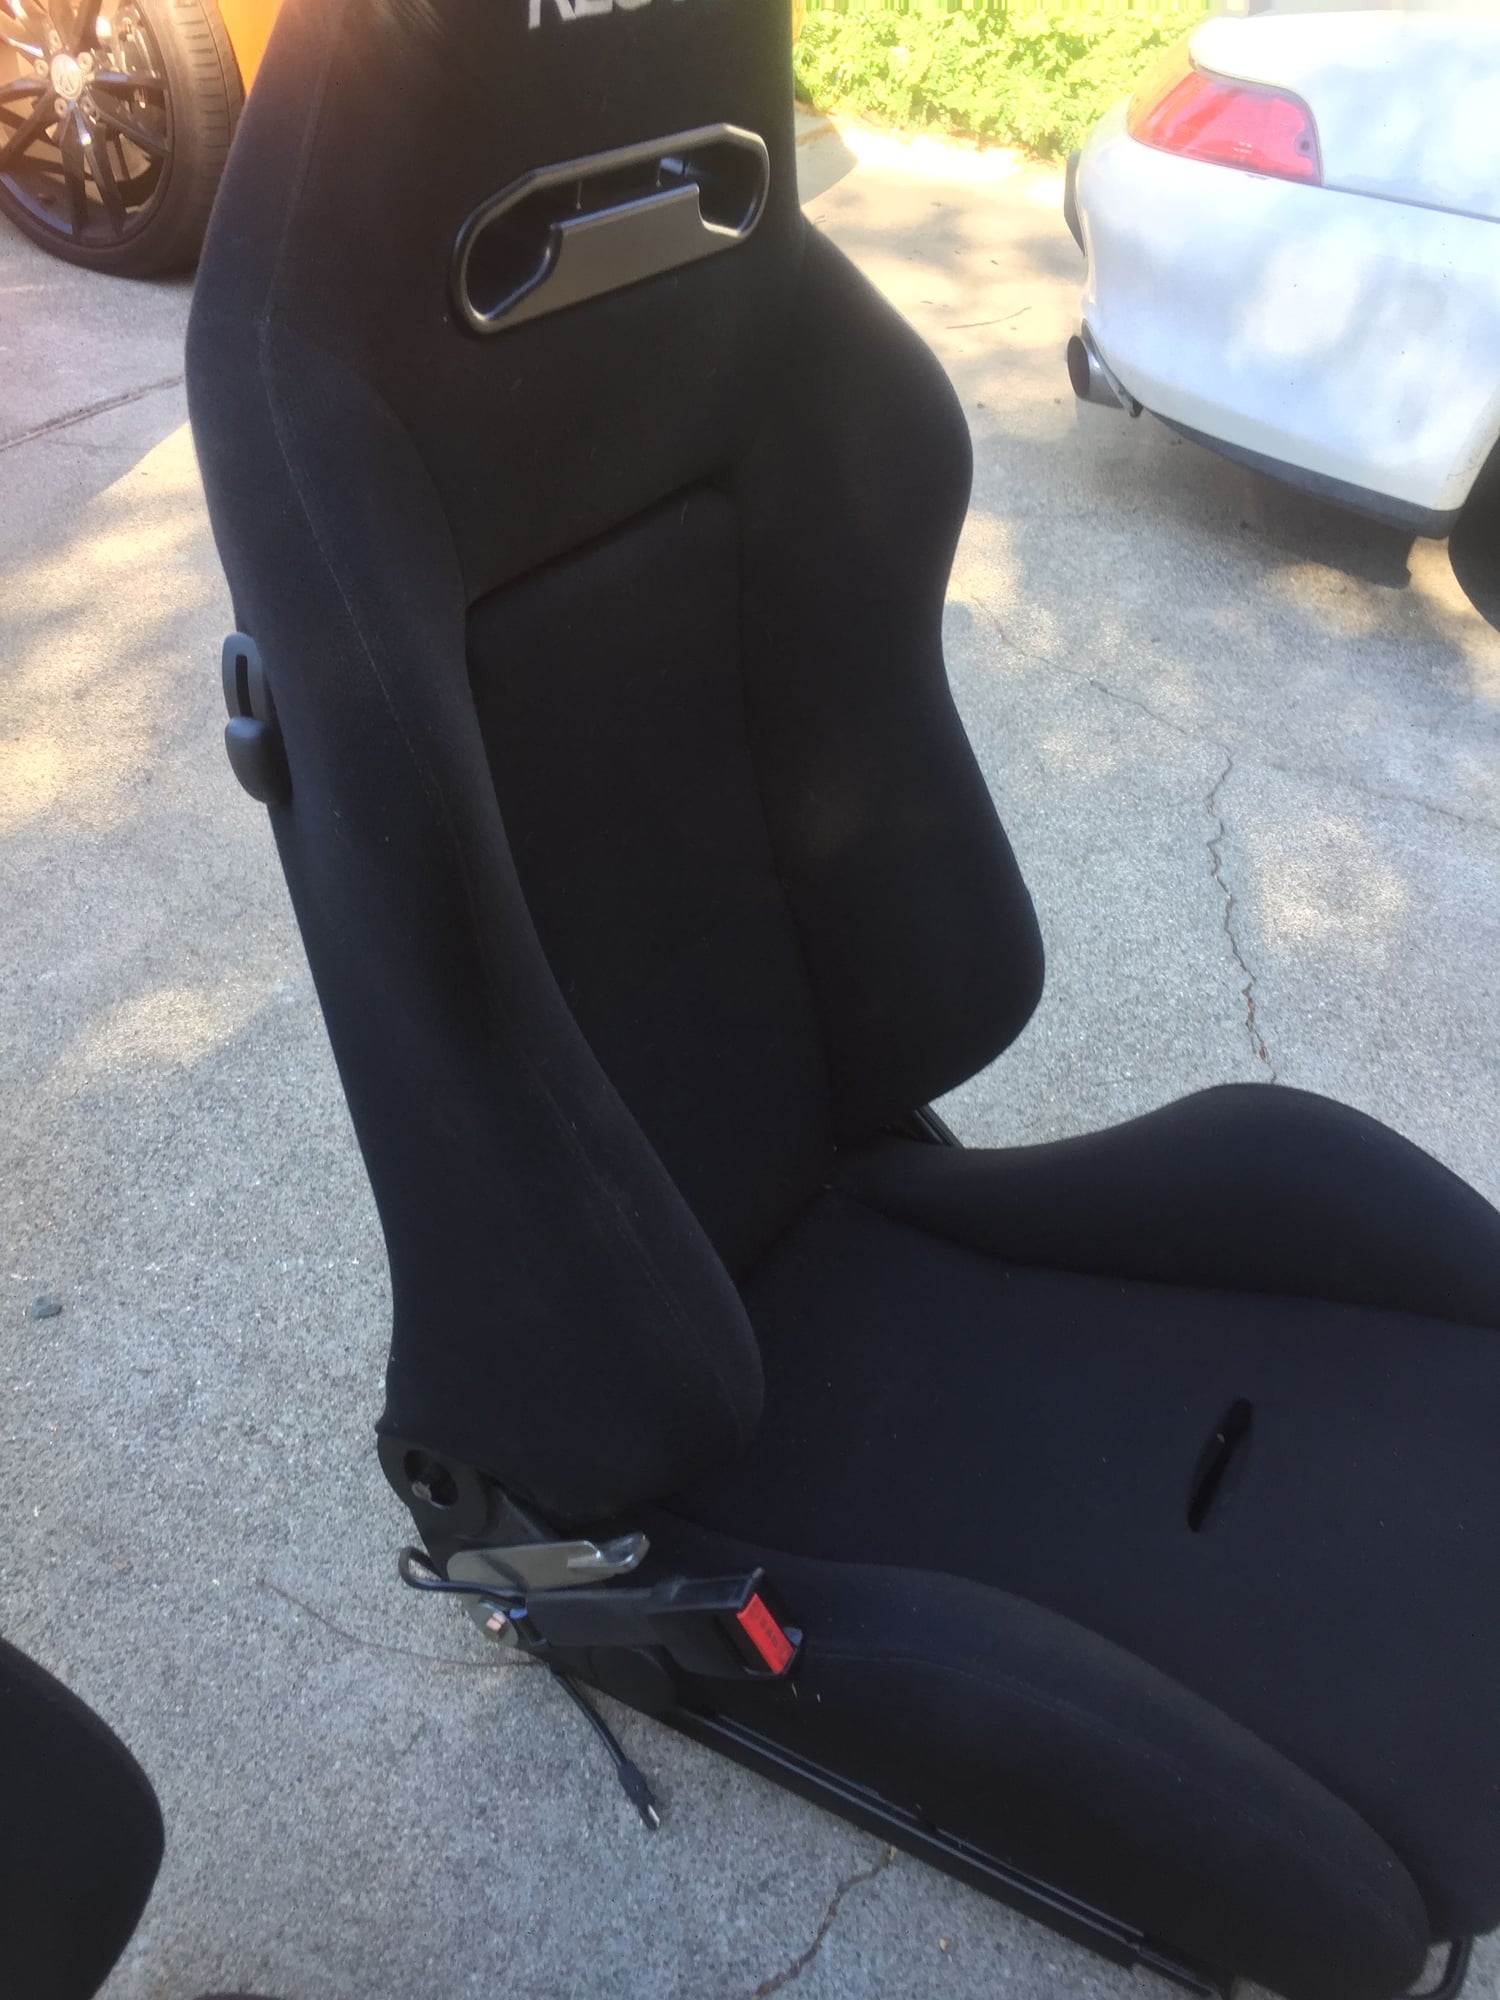 Interior/Upholstery - Recaro Speed seats (2), harnesses, BK belt hardware - Used - 1995 to 1998 Porsche 911 - Oakland, CA 94611, United States